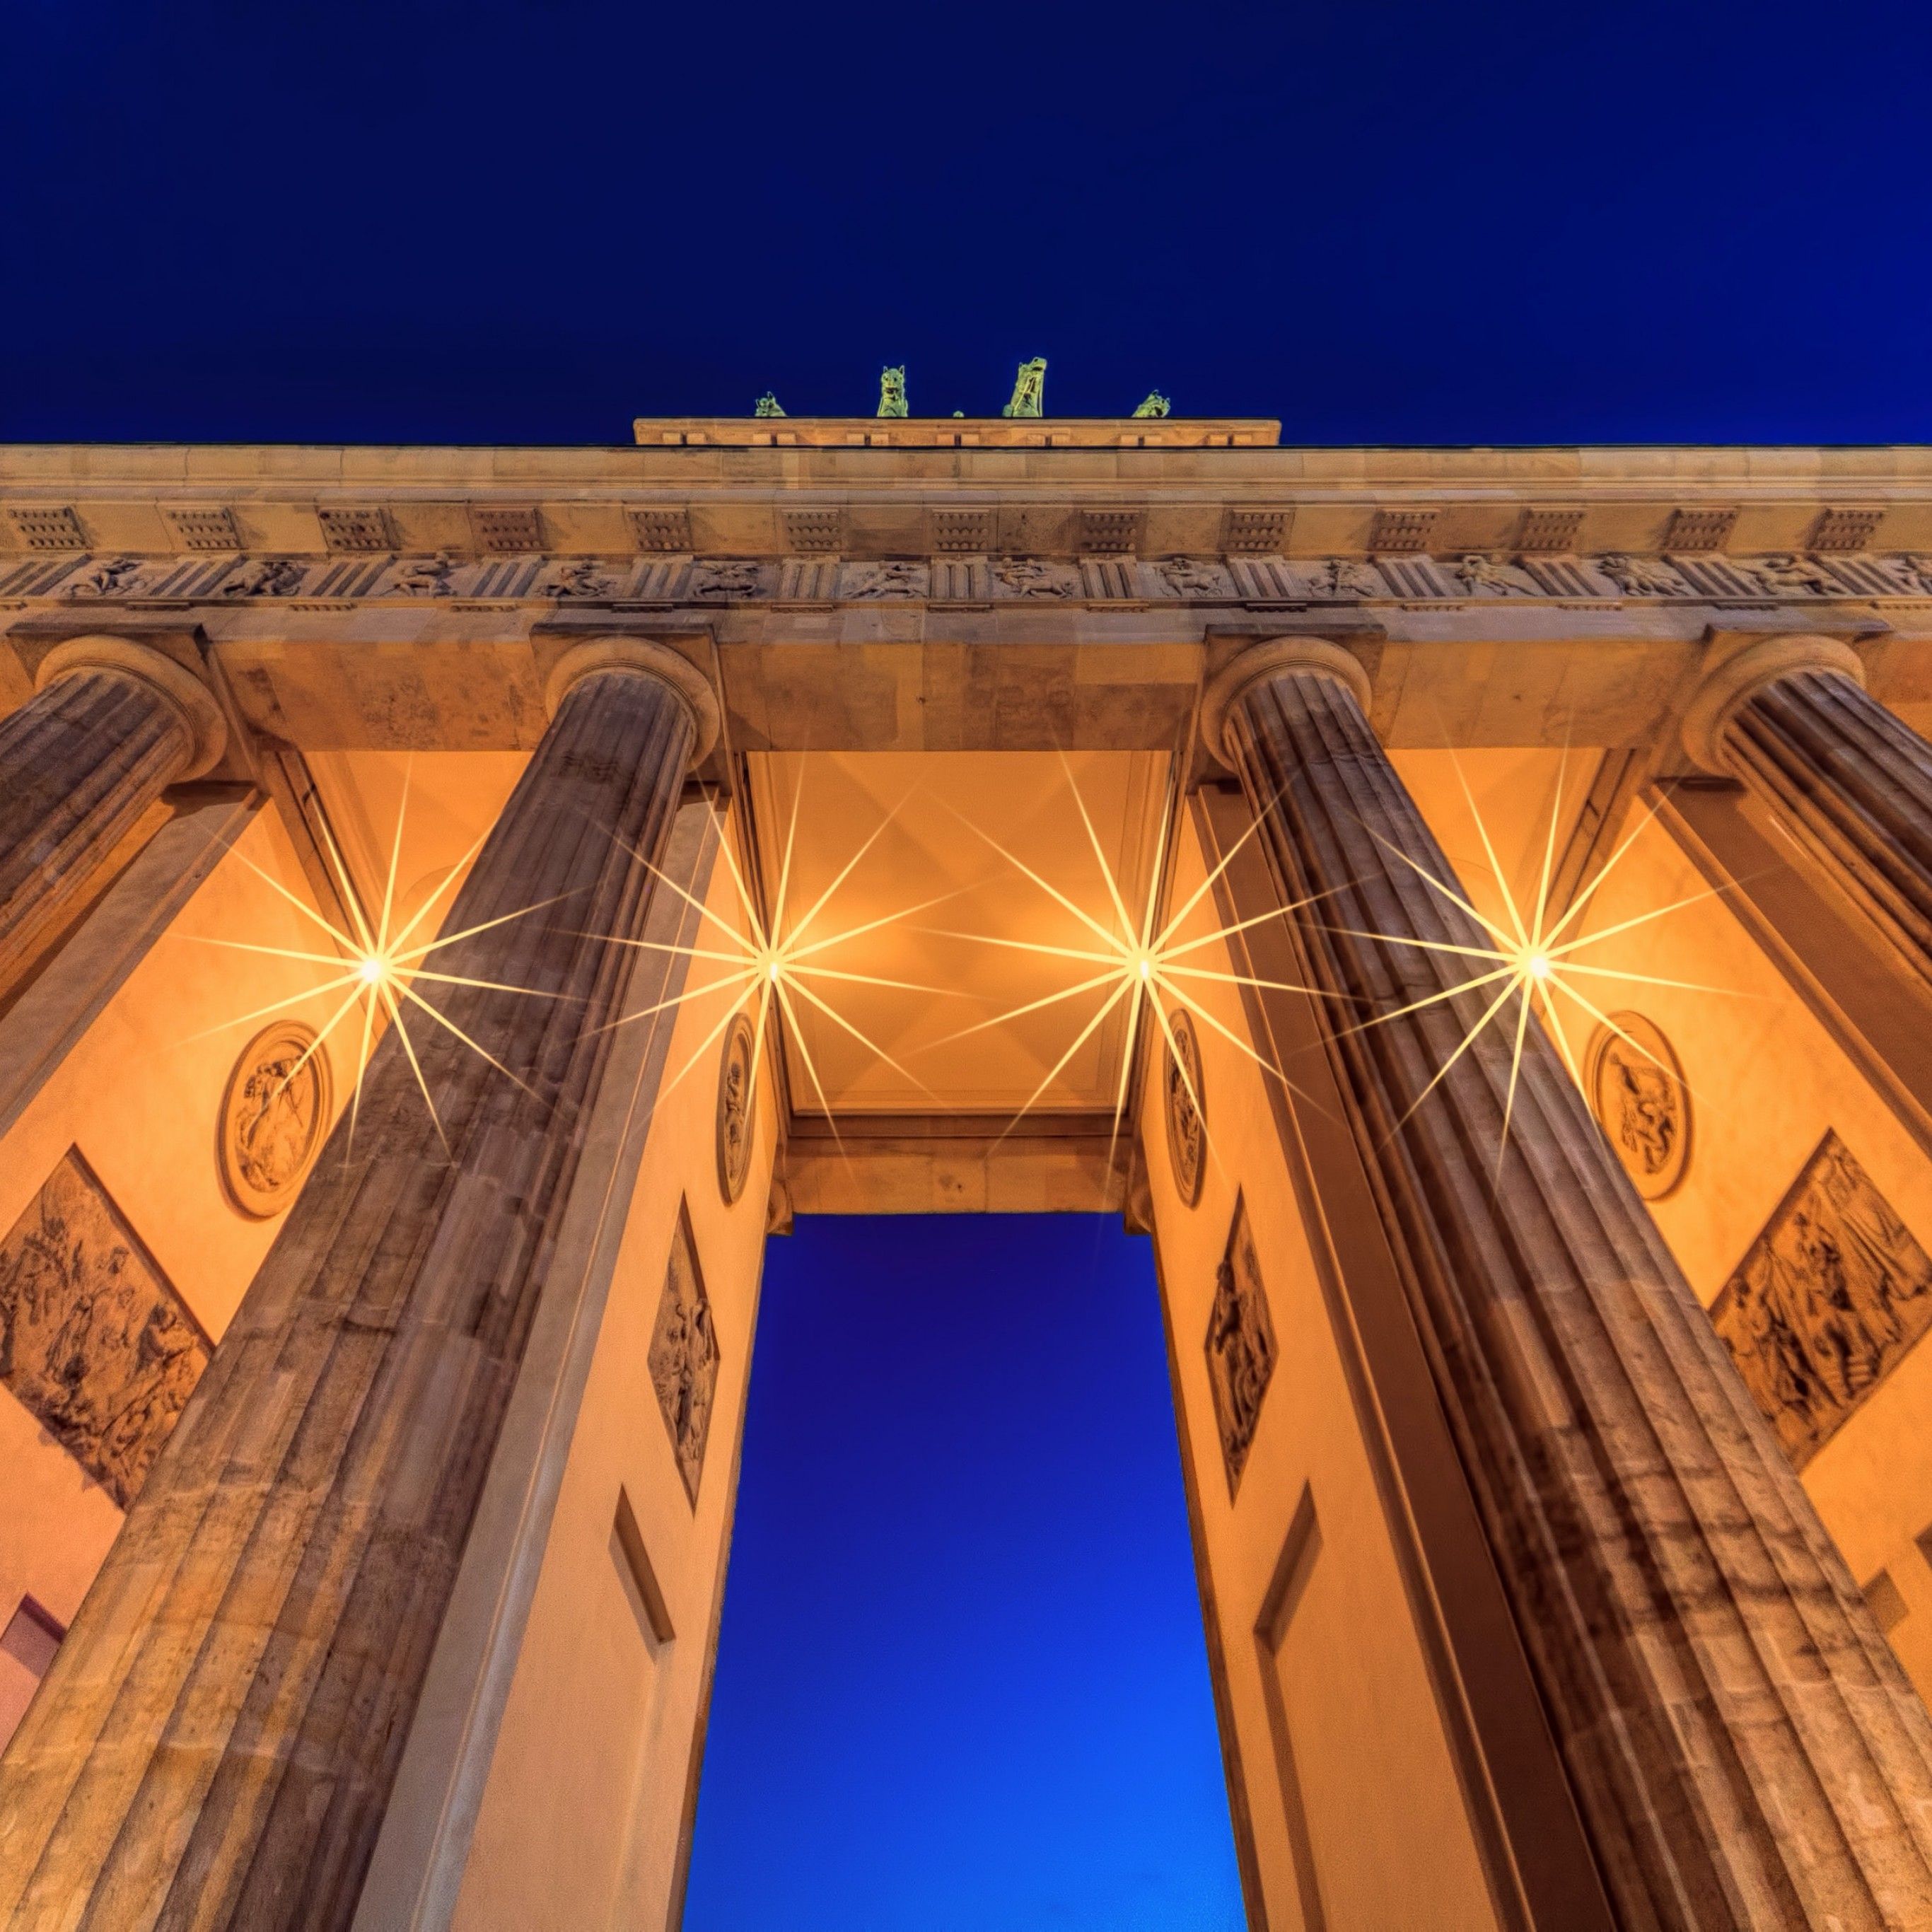 Brandenburg Gate 4K Wallpaper, Berlin, Germany, Low Angle Photography, Lights, Night, Blue Sky, Arch, Architecture